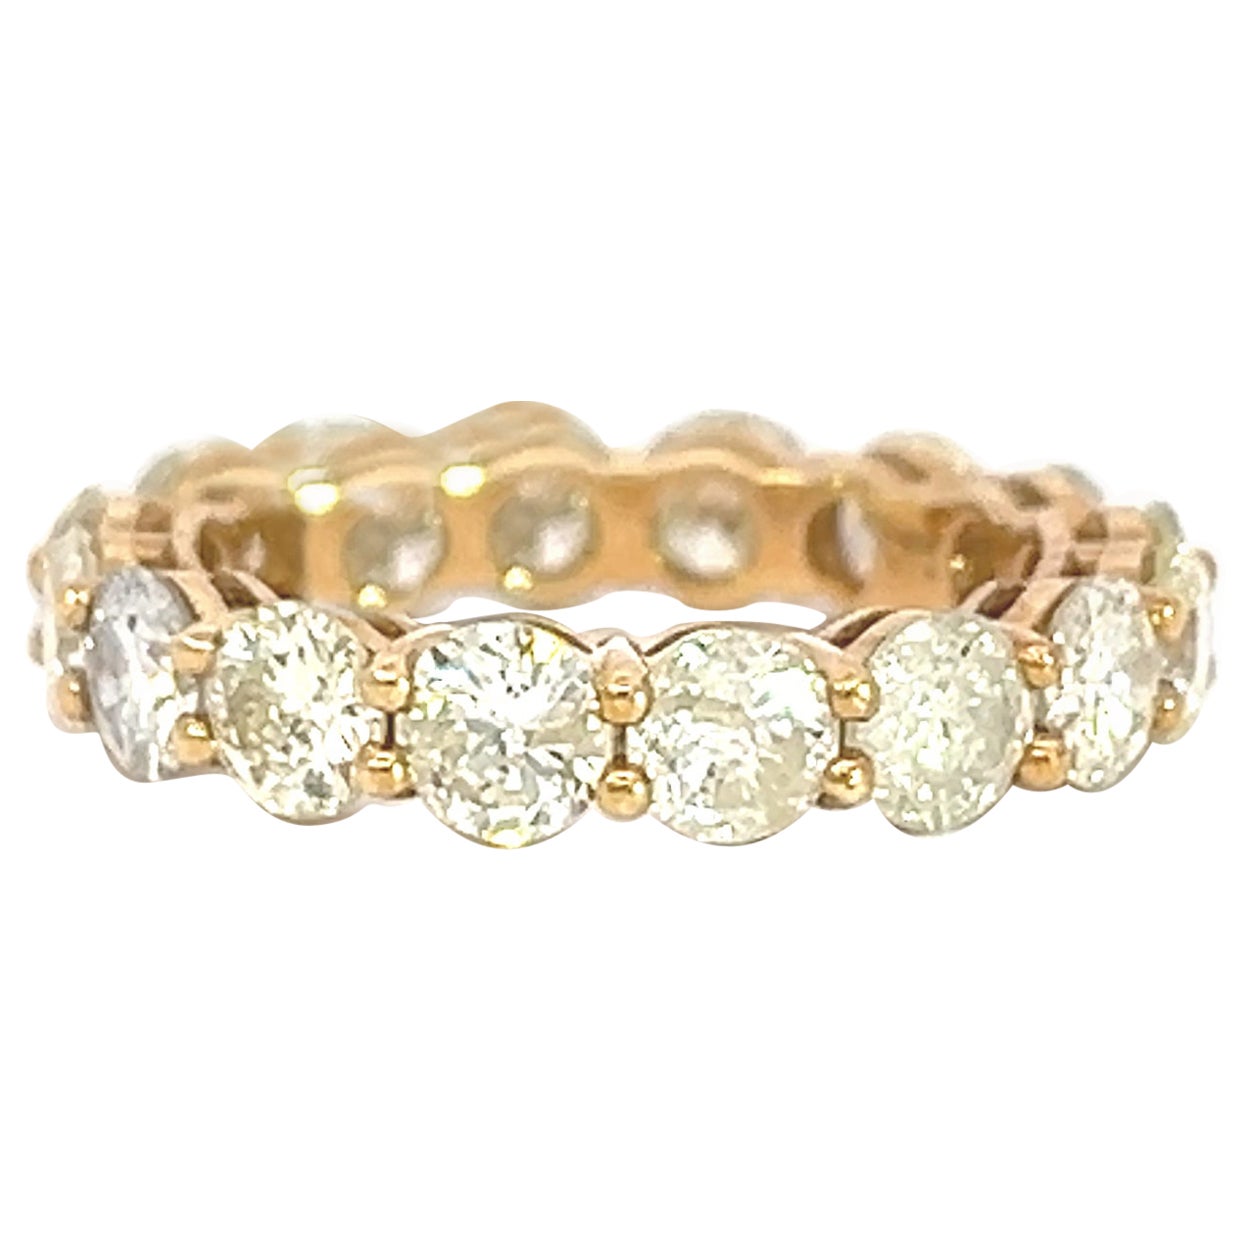 Classic 14k Gold 3.78 Carat Elegance Band Diamond Ring